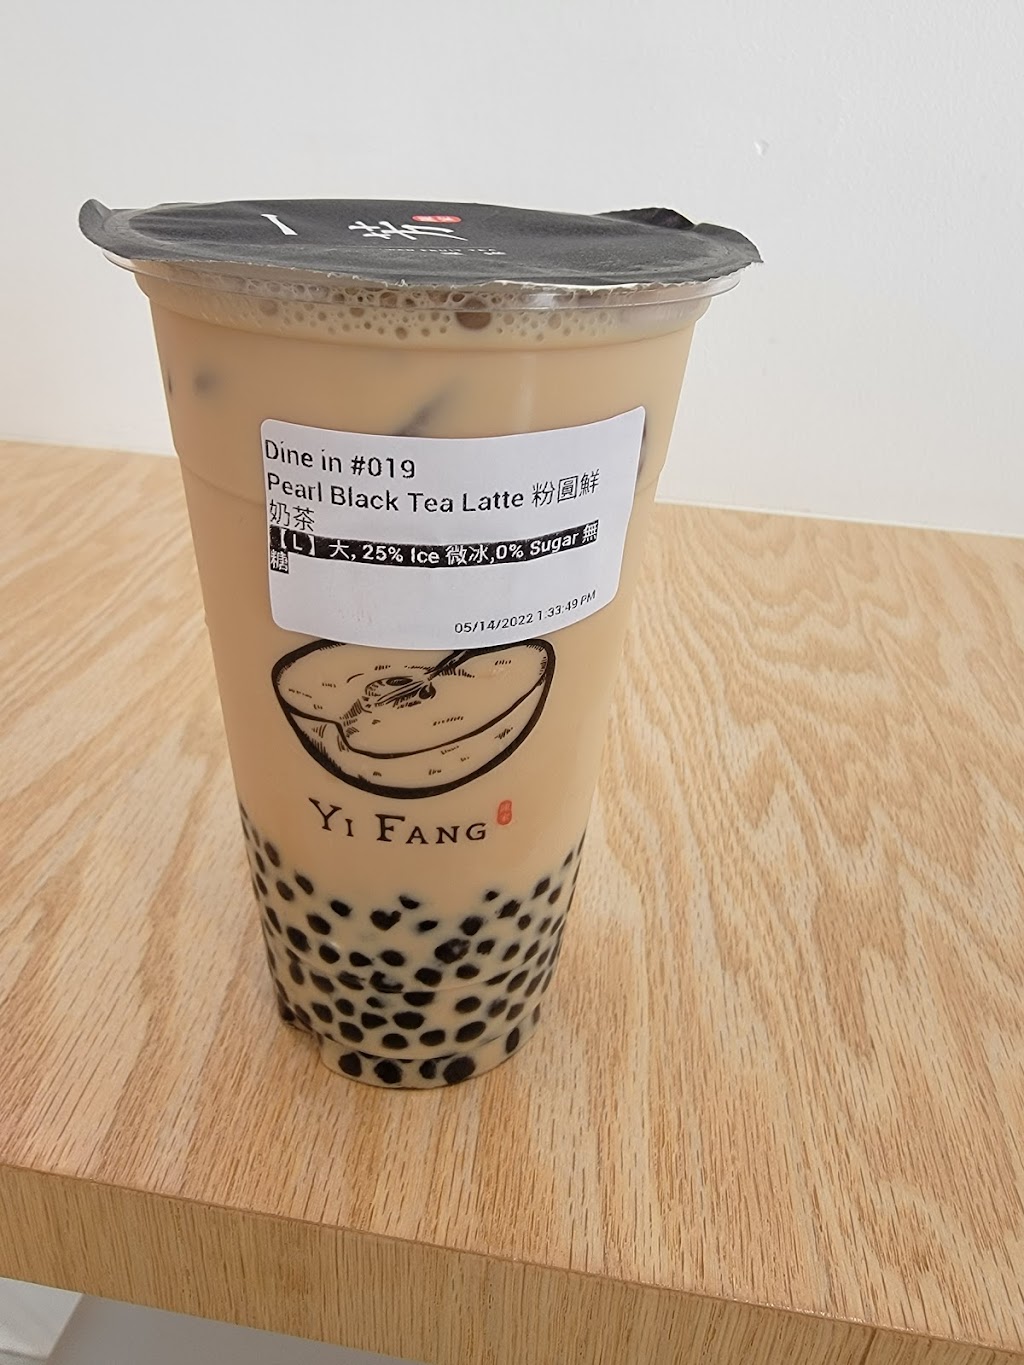 Yifang Taiwan fruit tea | 561 US-1 A5, Edison, NJ 08817 | Phone: (848) 209-9560